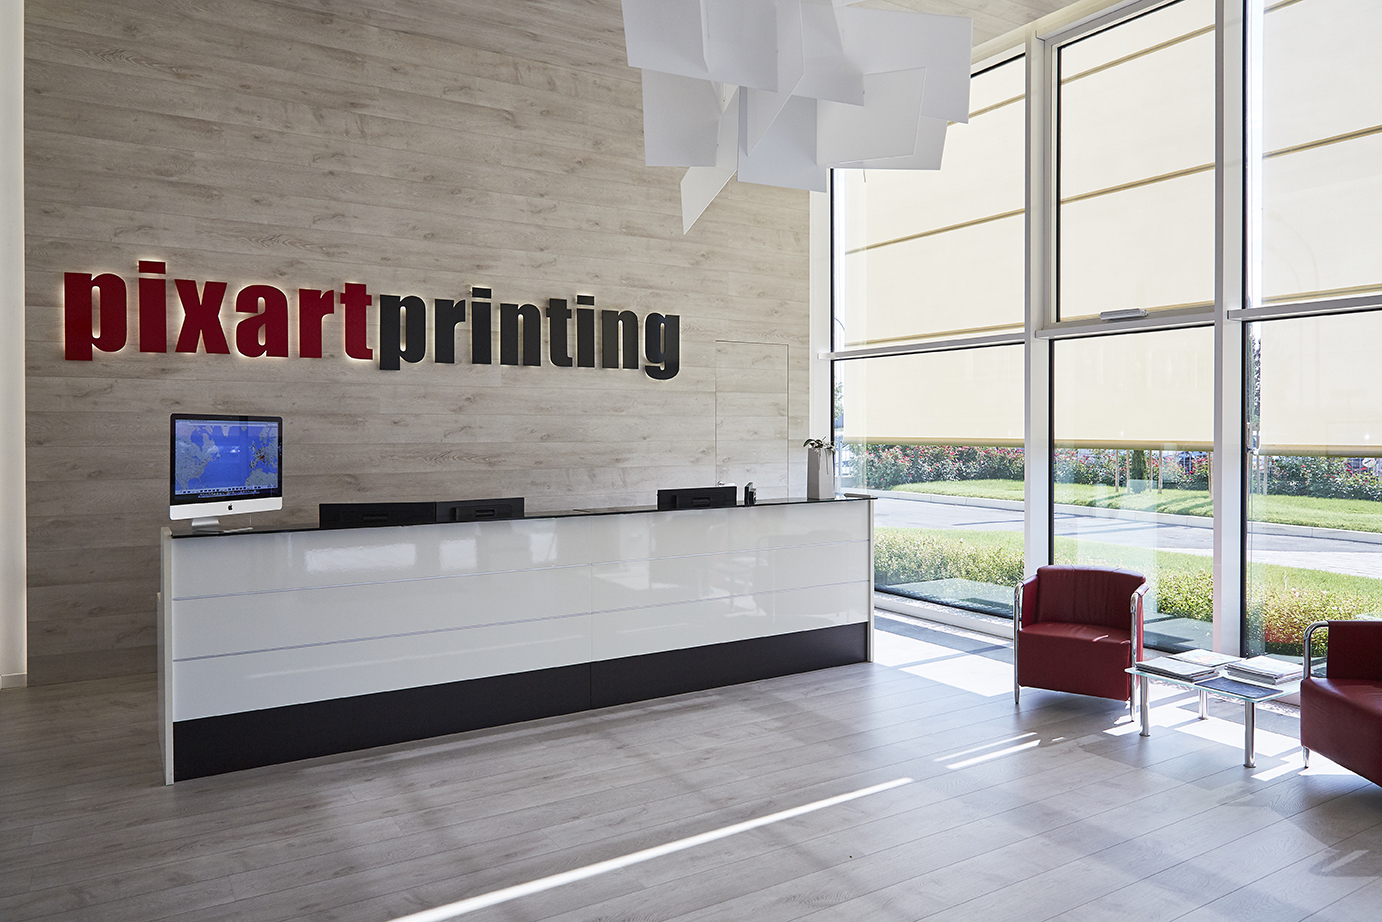 PIXART-printing